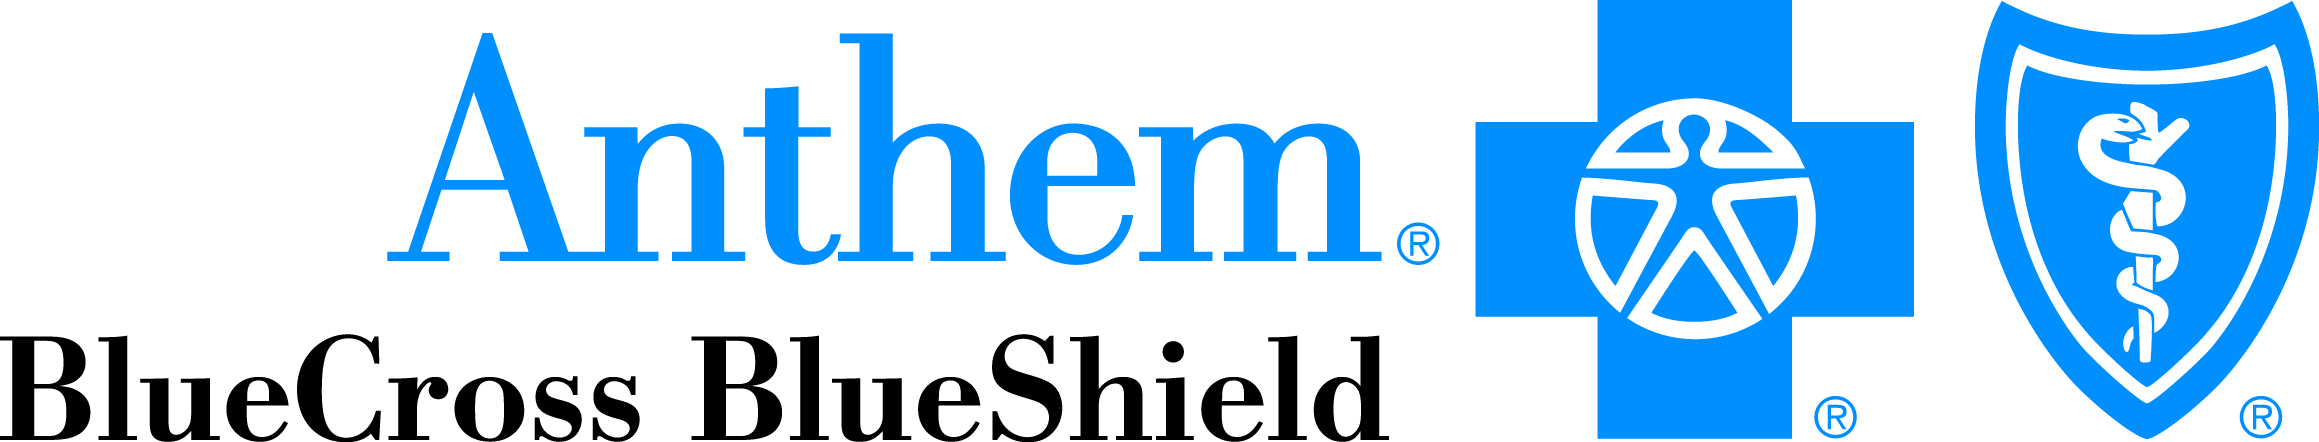 Anthem BlueCross BlueShield Sponsor logo